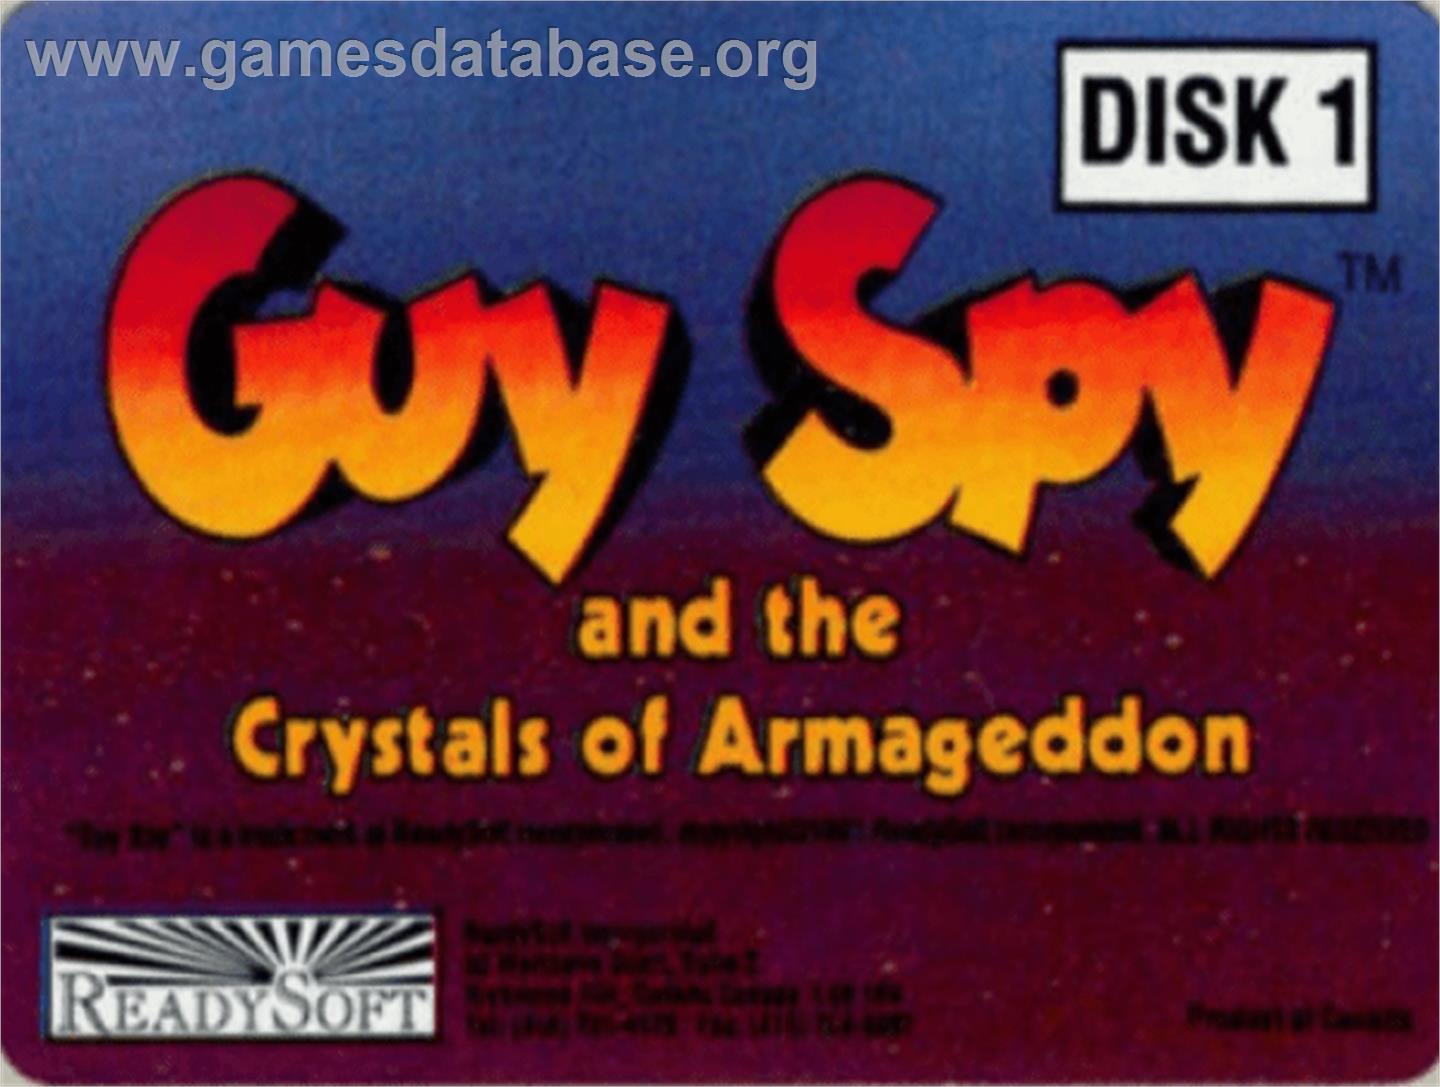 Guy Spy and the Crystals of Armageddon - Commodore Amiga - Artwork - Cartridge Top